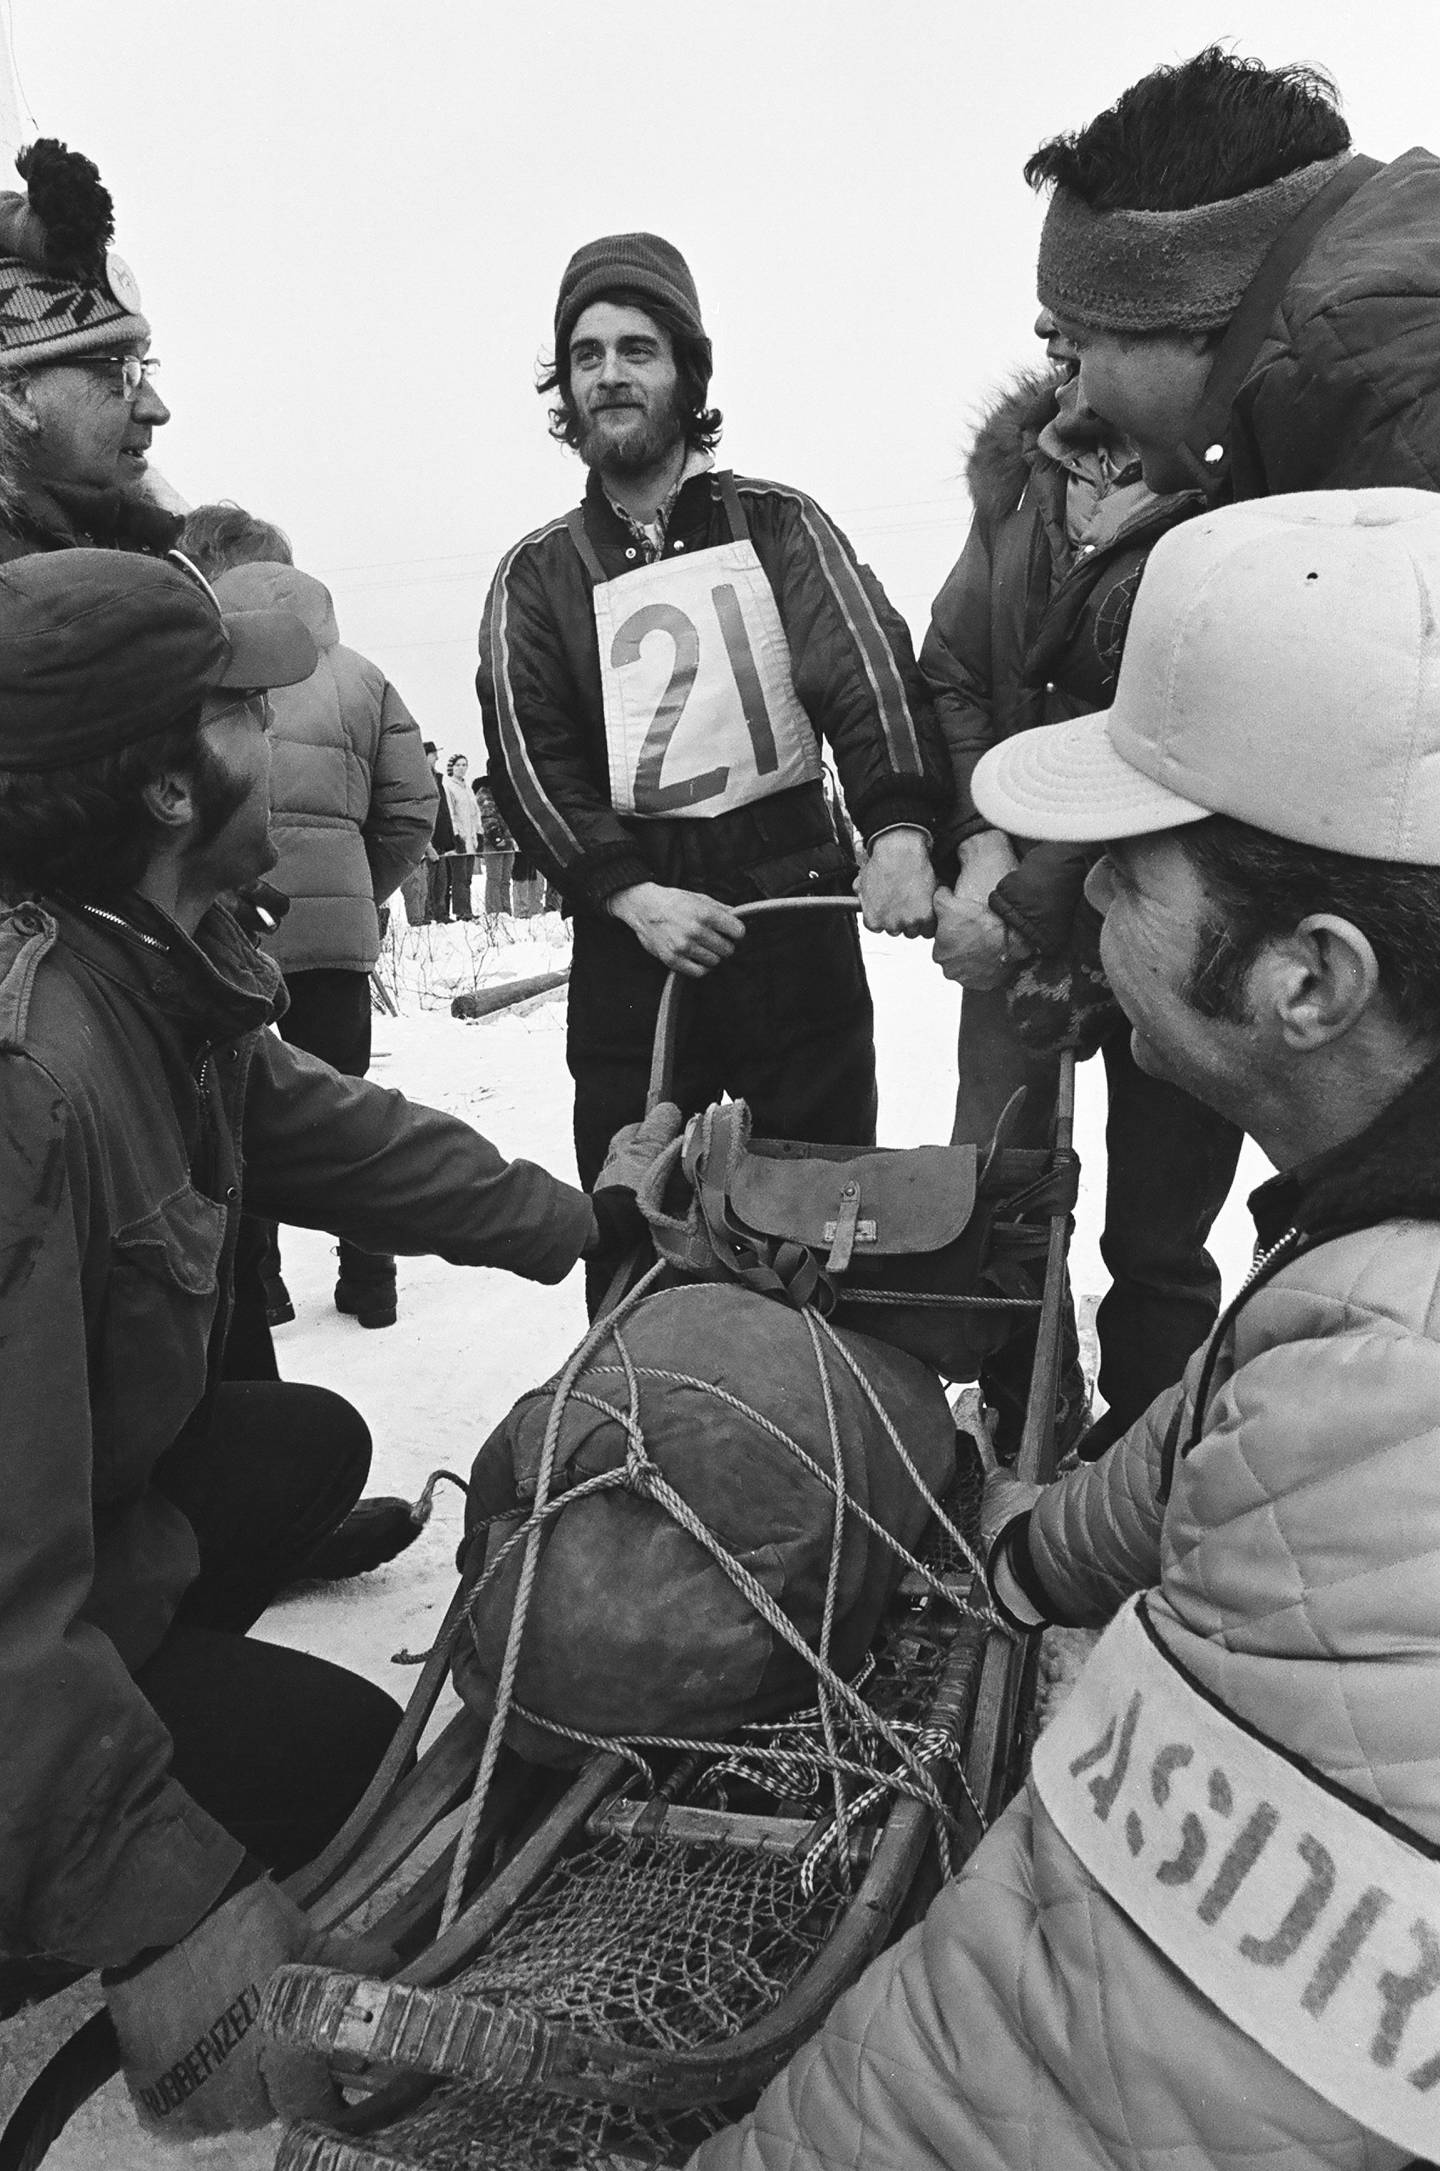 1973 Iditarod